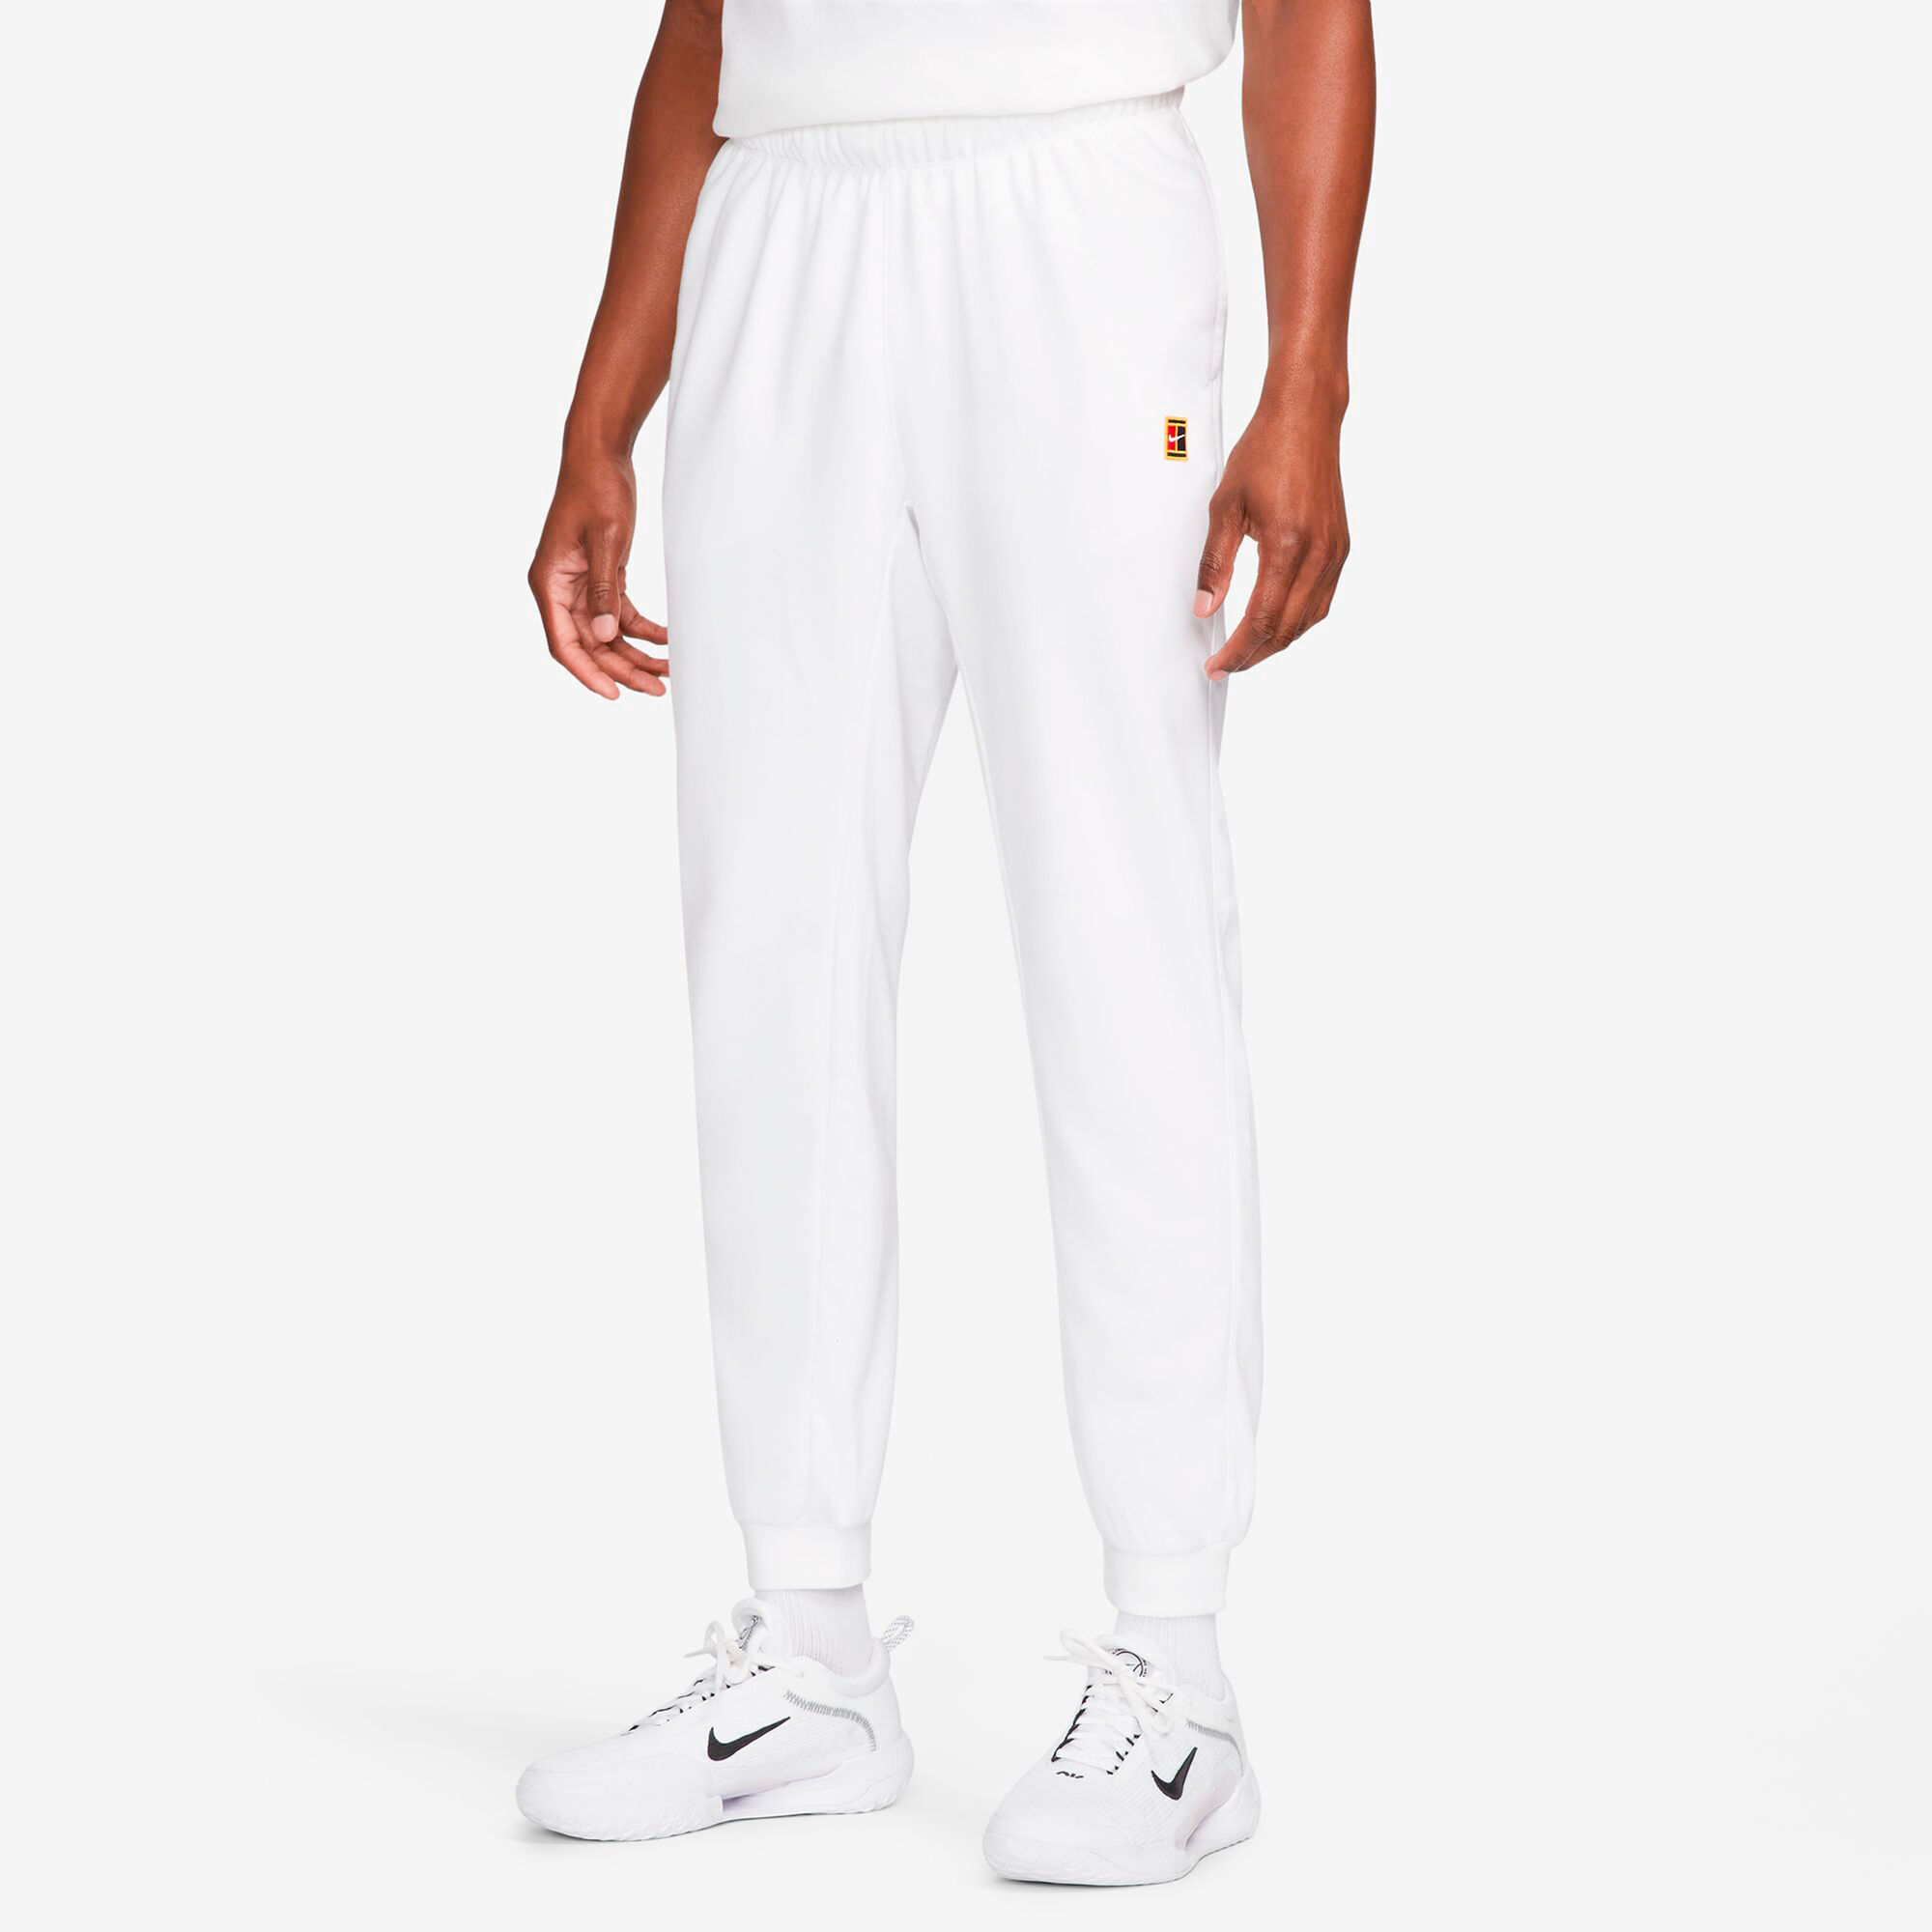 Buy Nike Dri-Fit Heritage Knit Training Pants Women White online